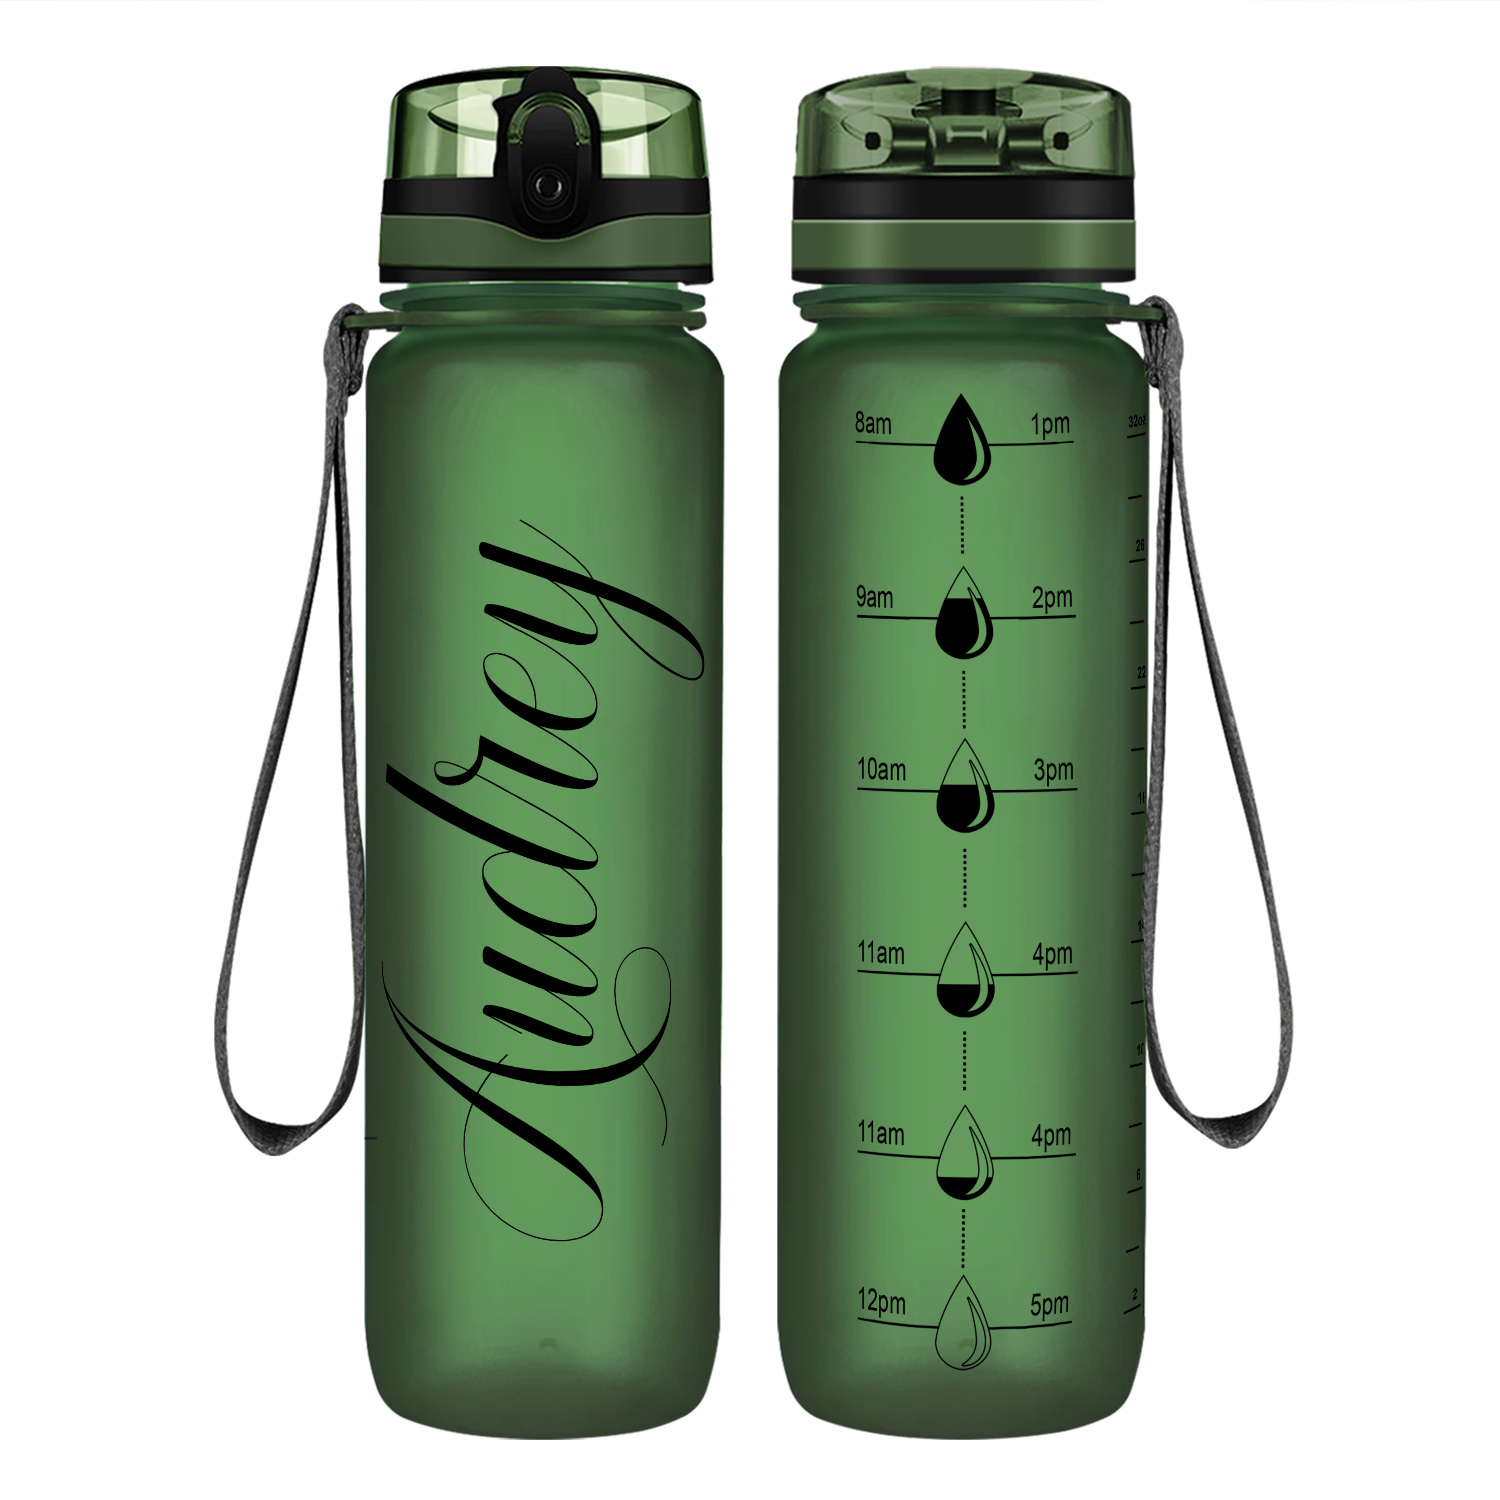 Cuptify Green Gloss 32 oz Motivational Water Bottle